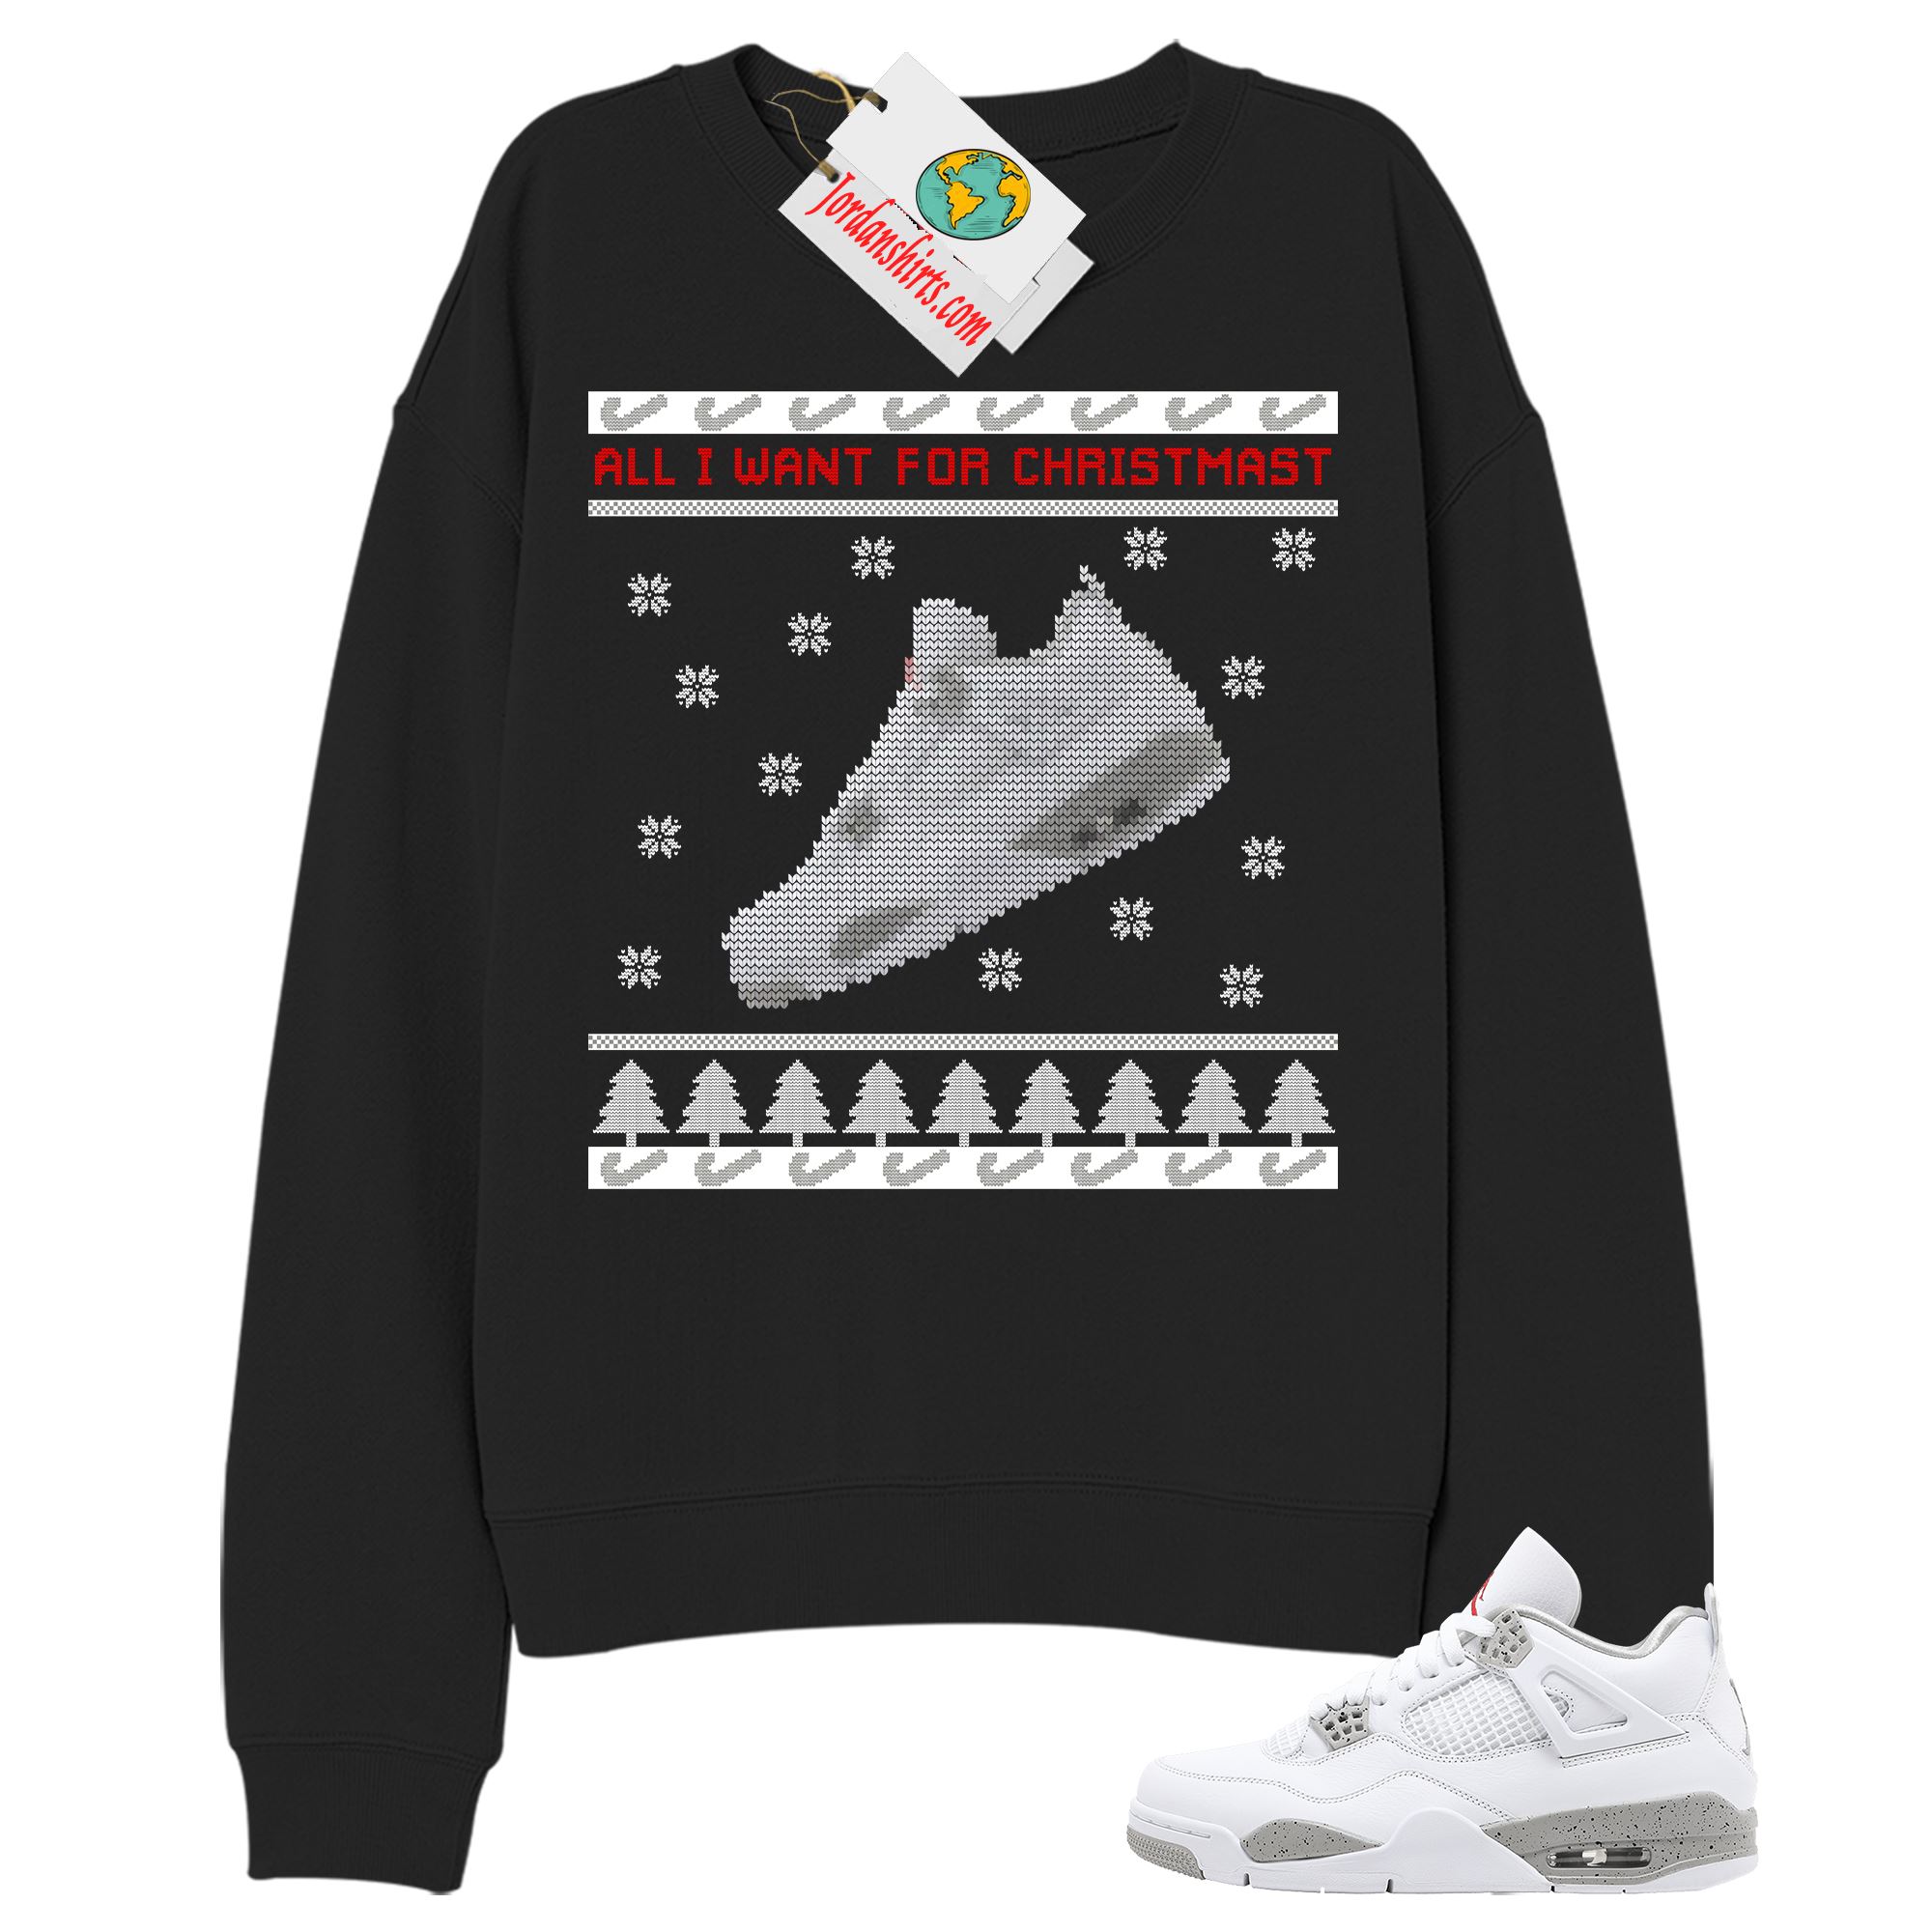 Jordan 4 Sweatshirt, Sneaker Ugly Christmas Shirt Black Sweatshirt Air Jordan 4 White Oreo 4s Plus Size Up To 5xl